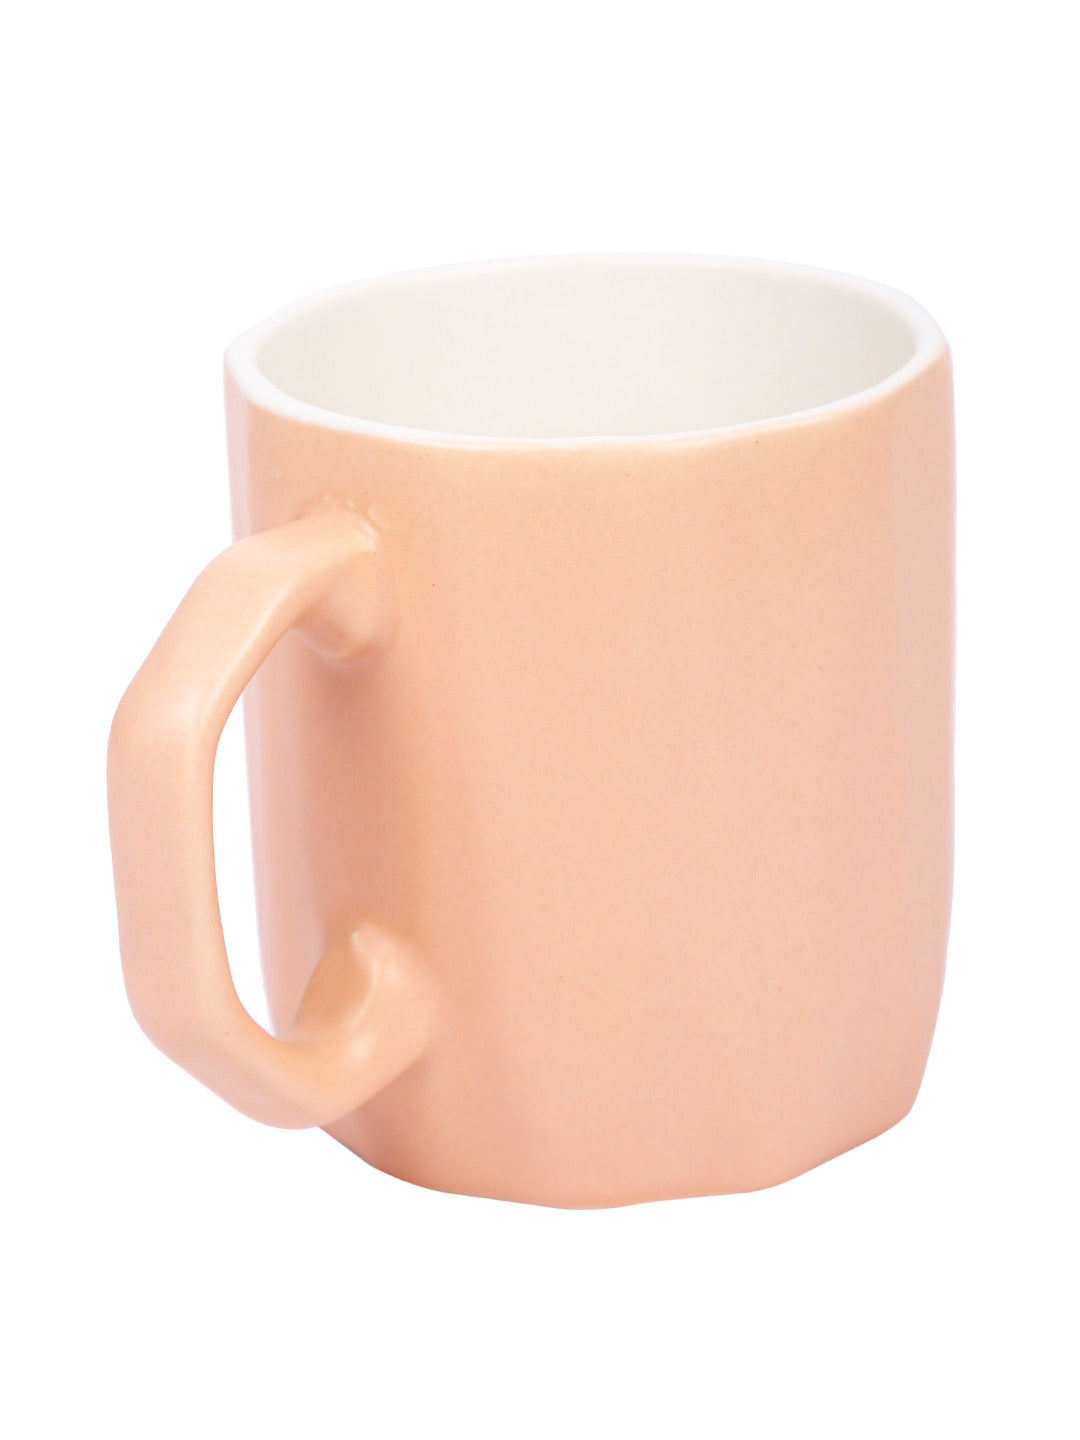 Set of 6 Ceramic Peach Coffee Mug - Default Title (CUP2103OR_6)